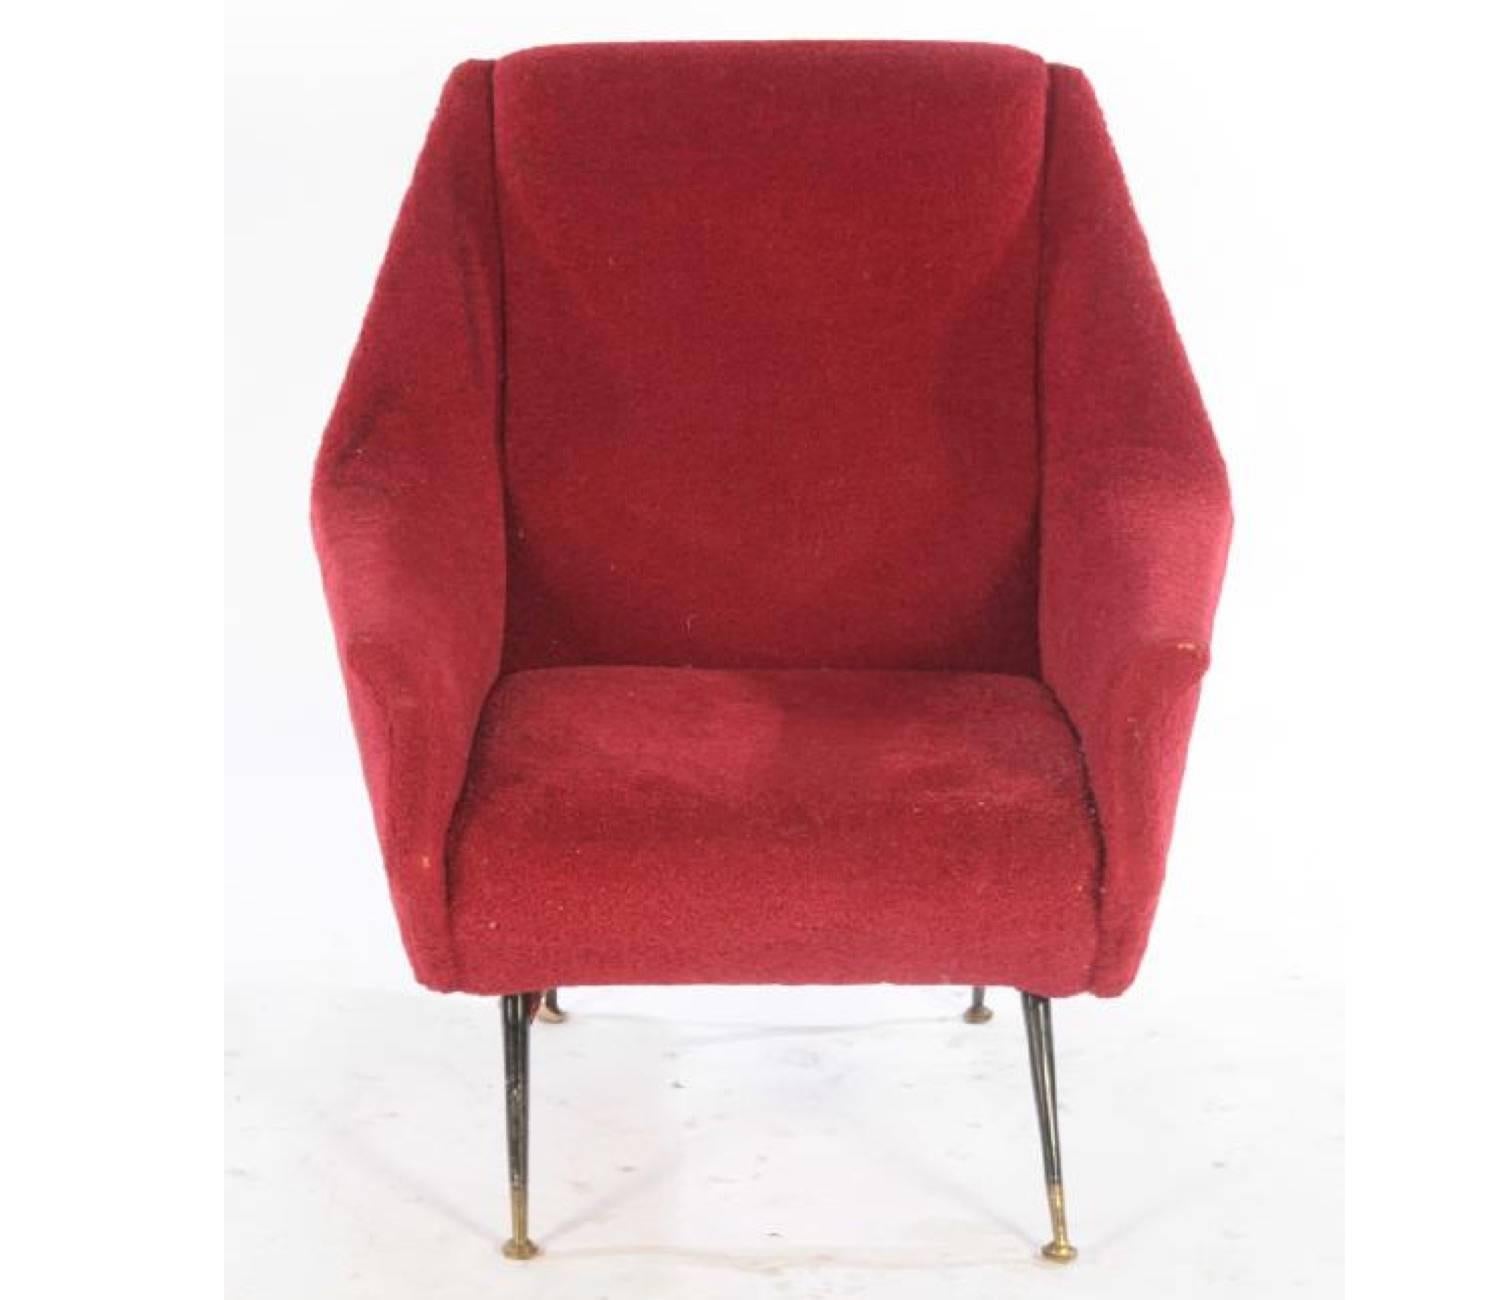 An Italian Mid-Century modern Gigi Radice upholstered club chair raised on metal legs with brass sabots, circa 1950. 

Measures: Seat height 16